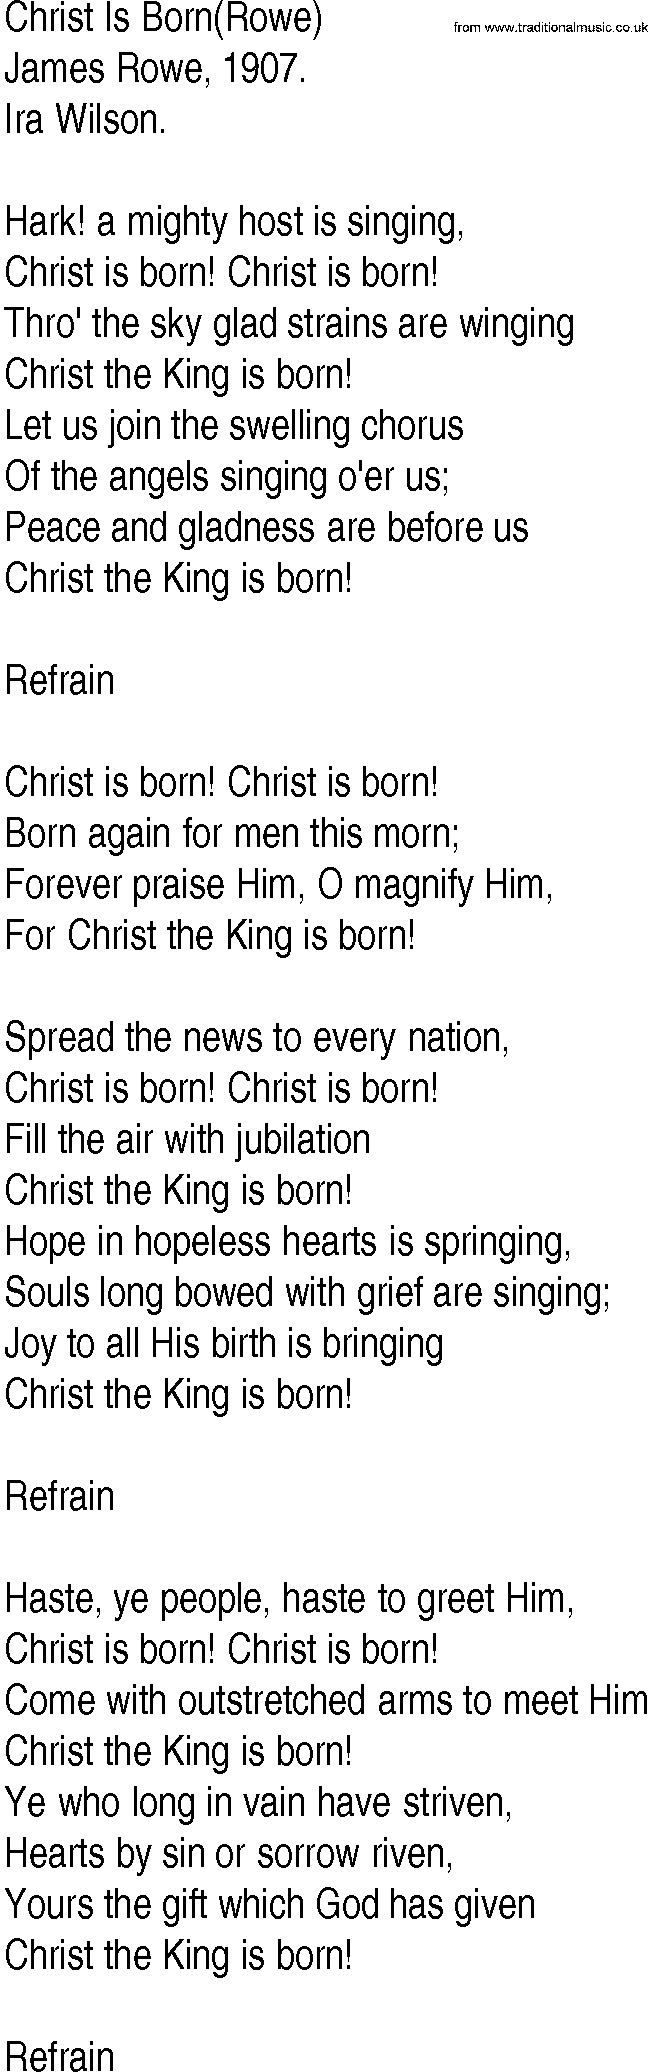 Hymn and Gospel Song: Christ Is Born(Rowe) by James Rowe lyrics